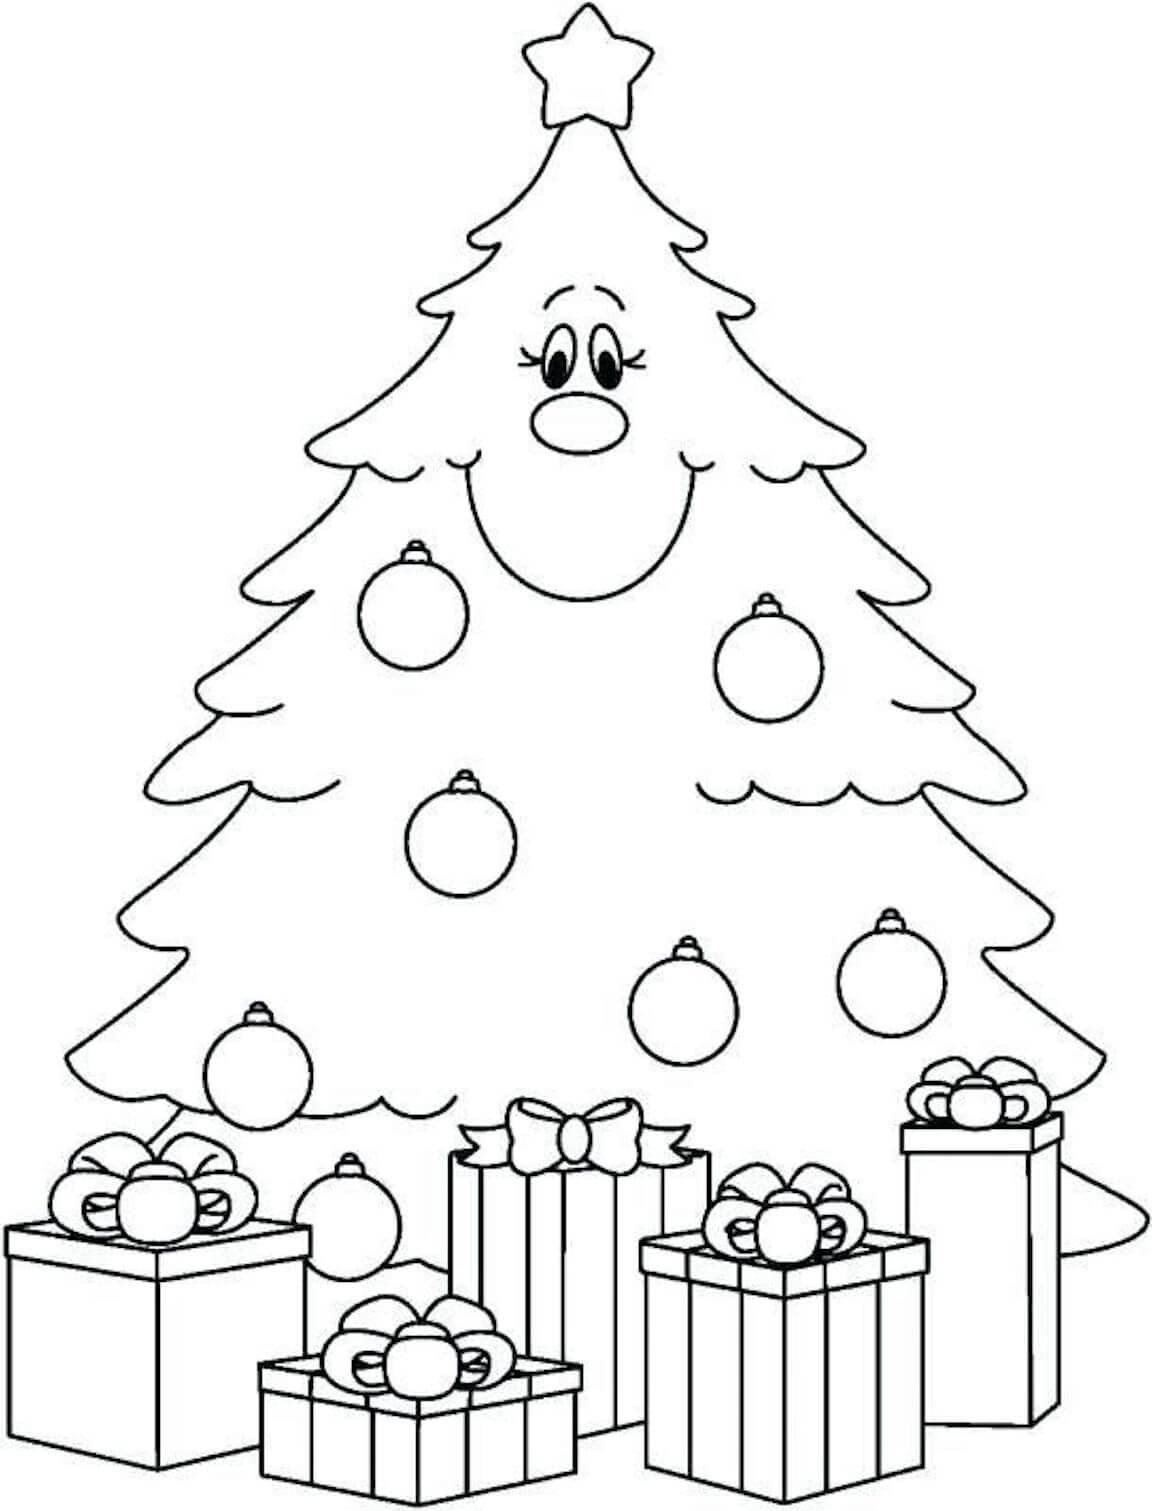 Desenhos de Árvore de Natal Sorridente com Caixas de Presente para colorir